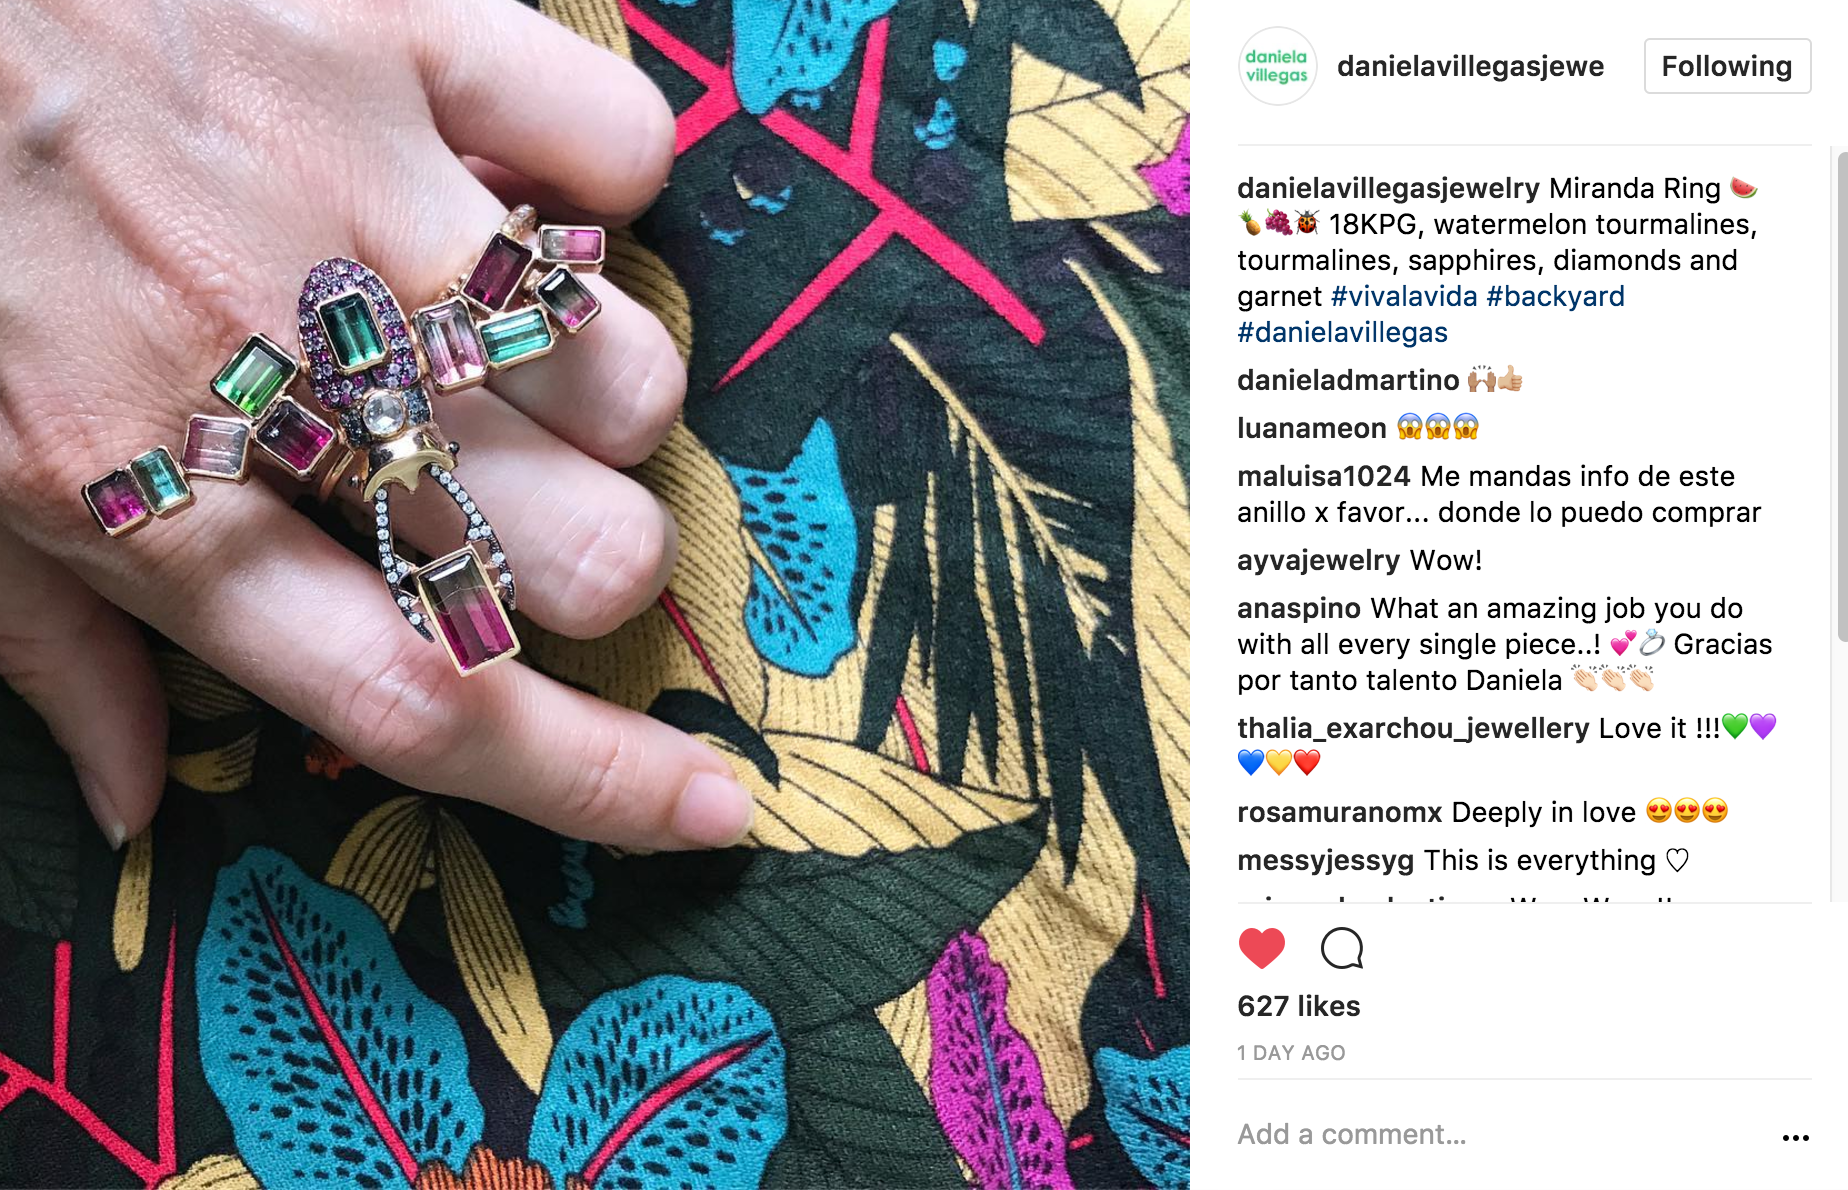 danielavillegasjewelry Instagram of miranda ring